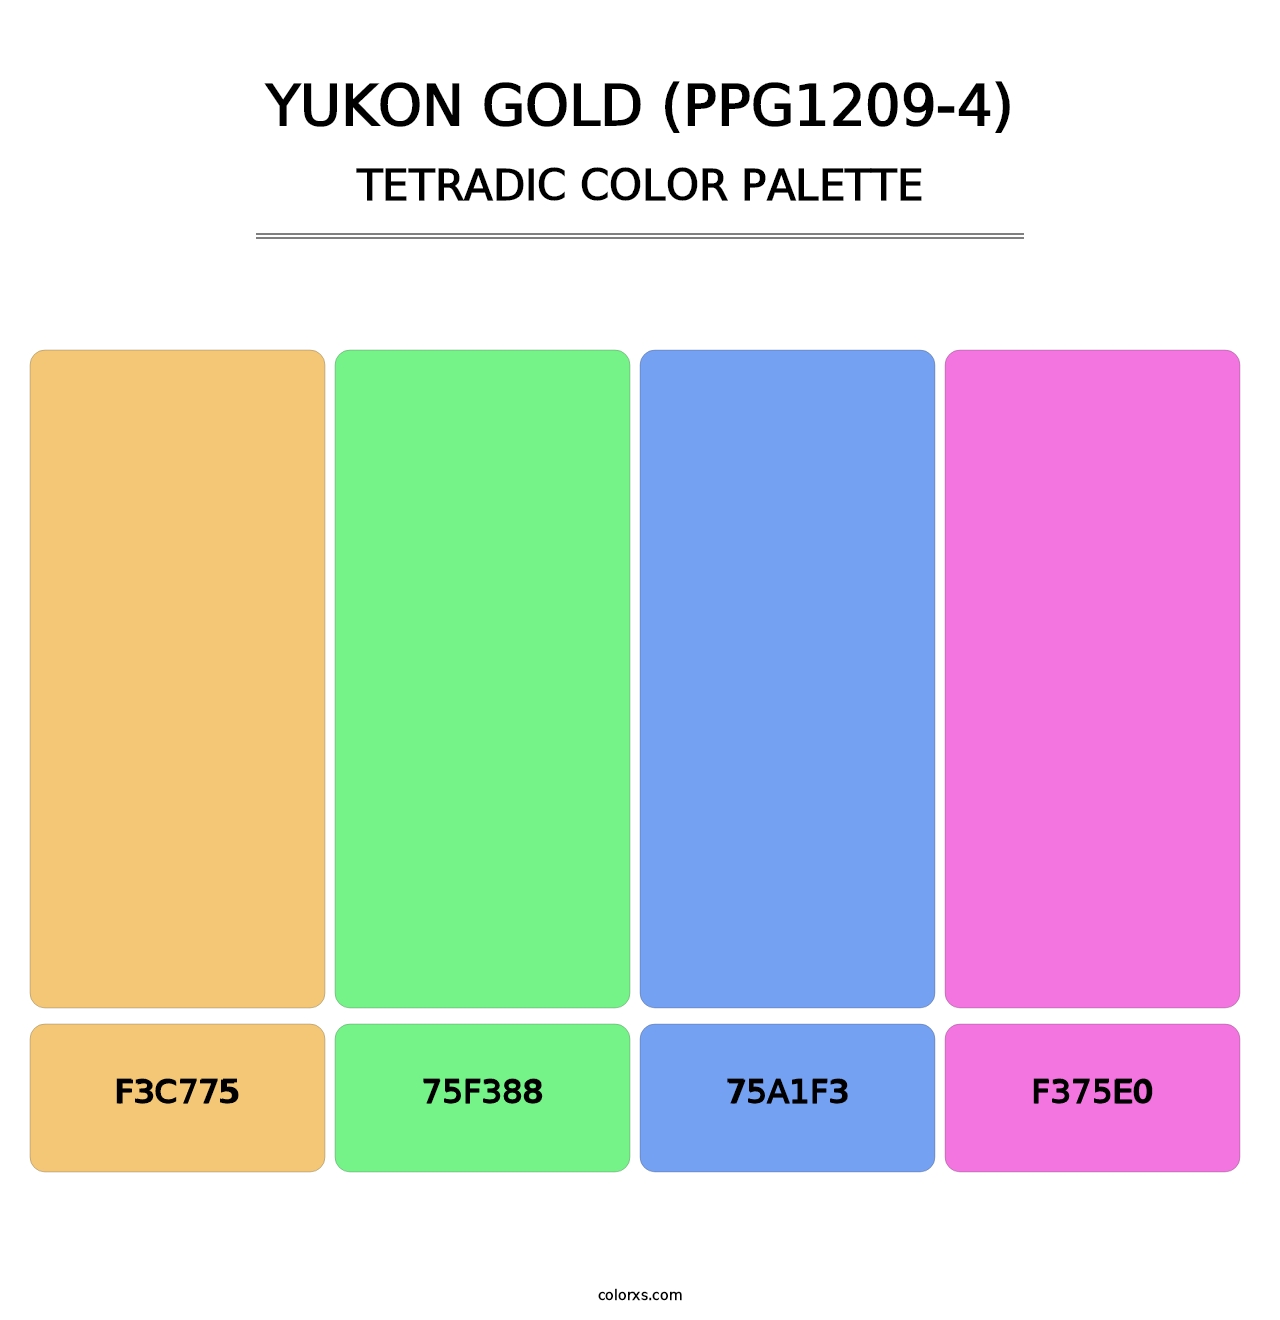 Yukon Gold (PPG1209-4) - Tetradic Color Palette